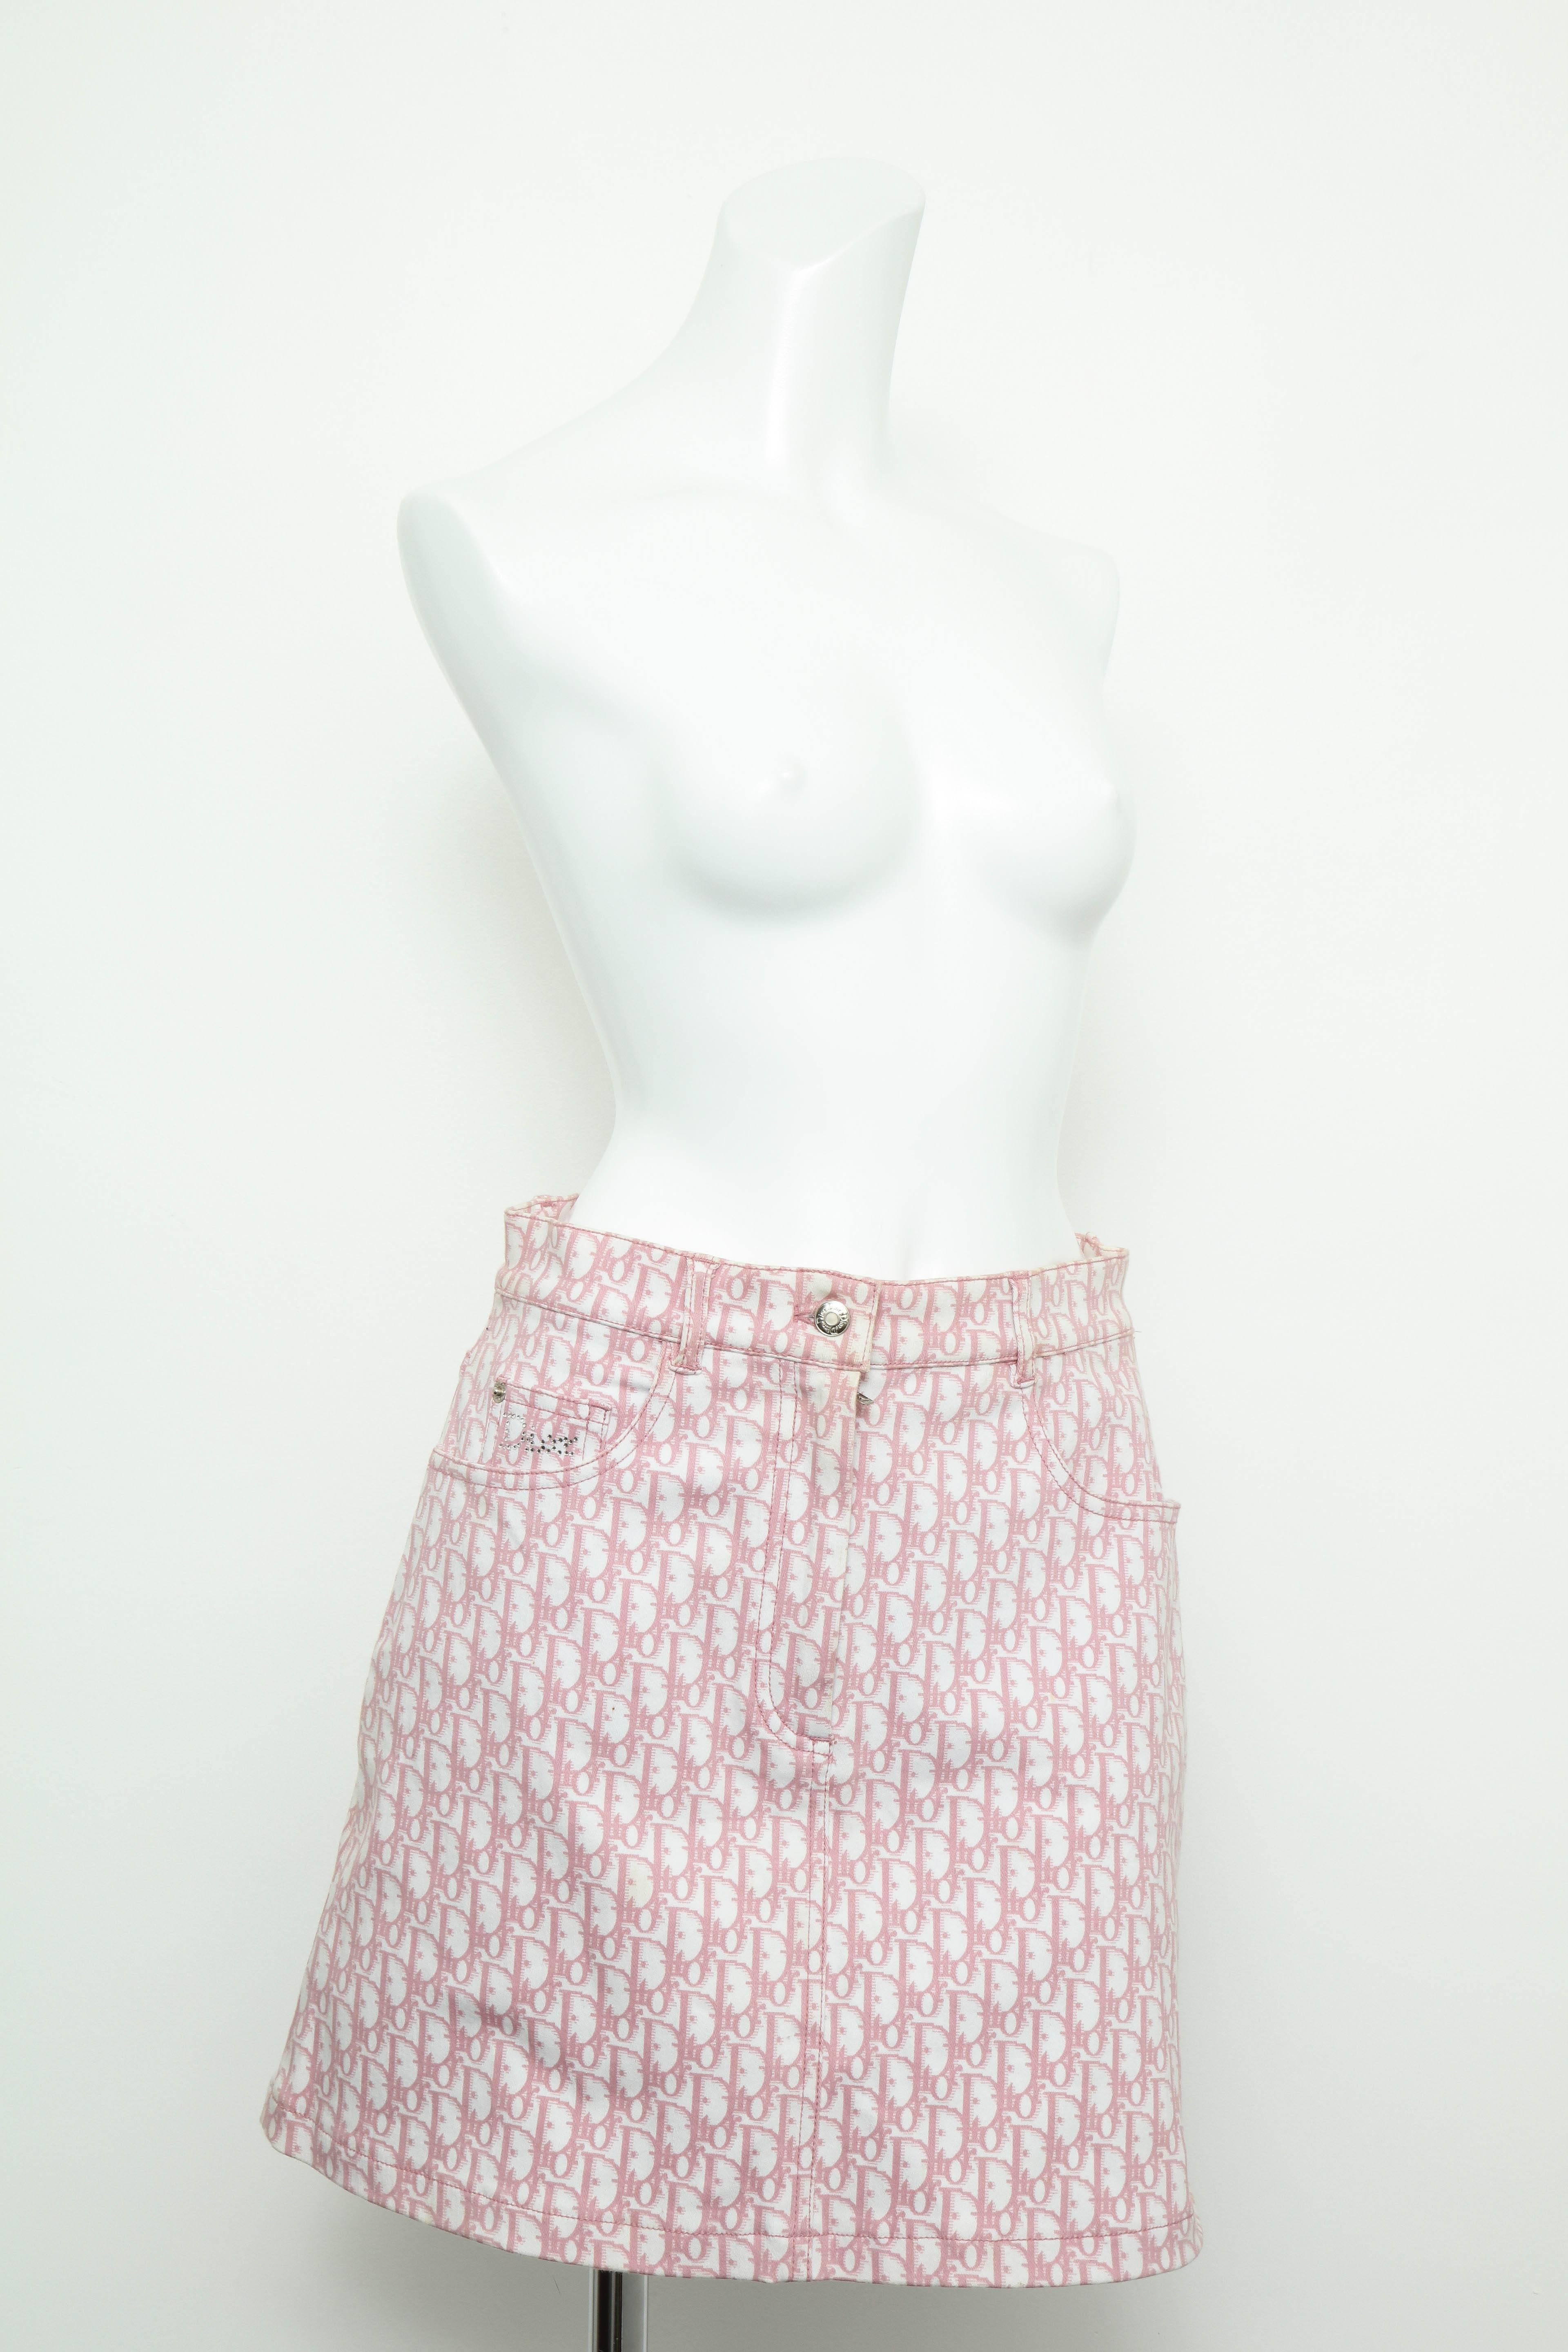 Christian Dior pink trotter logo skirt designed by John Galliano.

FR Size 42